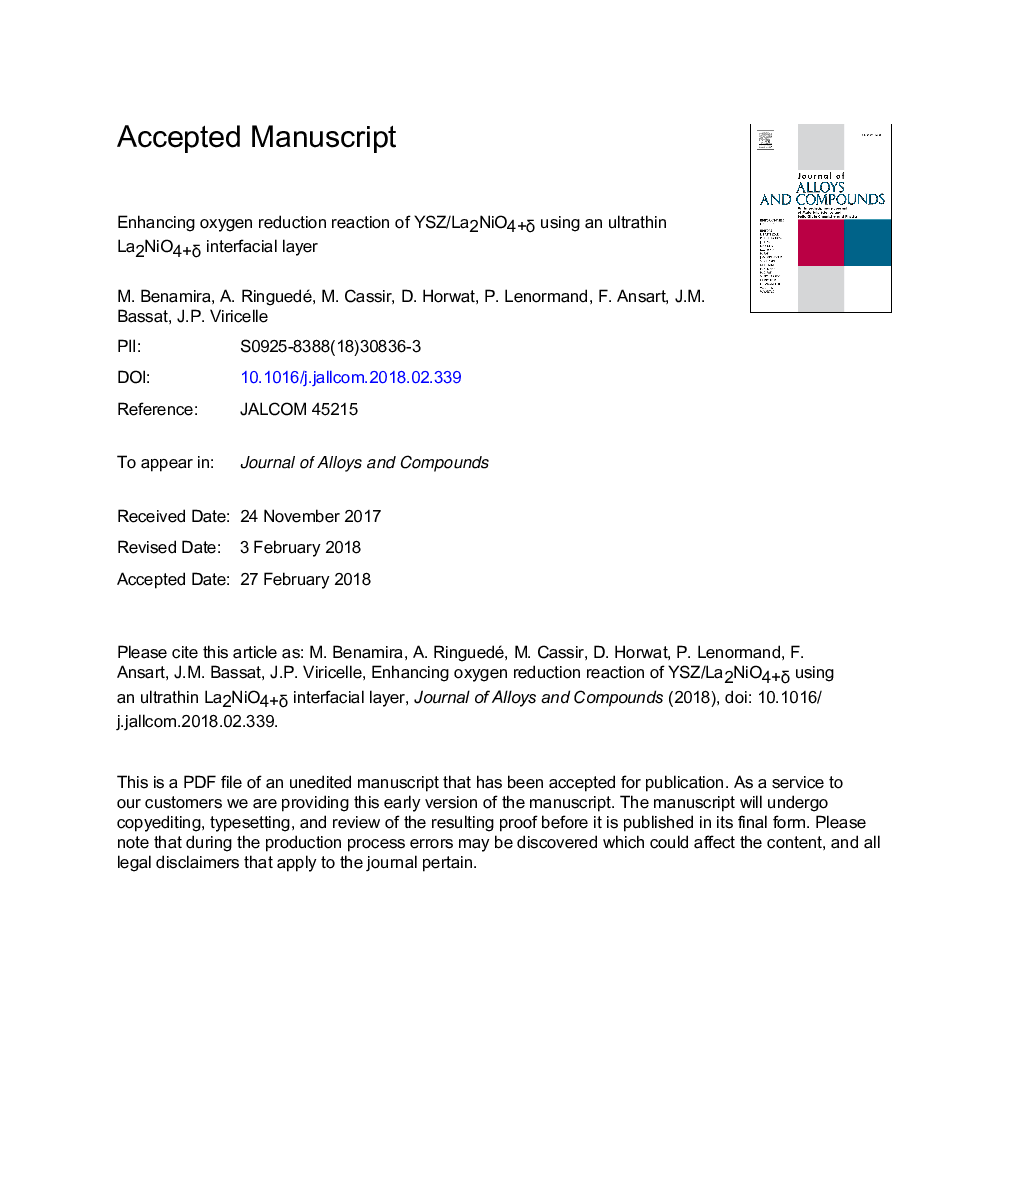 Enhancing oxygen reduction reaction of YSZ/La2NiO4+Î´ using an ultrathin La2NiO4+Î´ interfacial layer